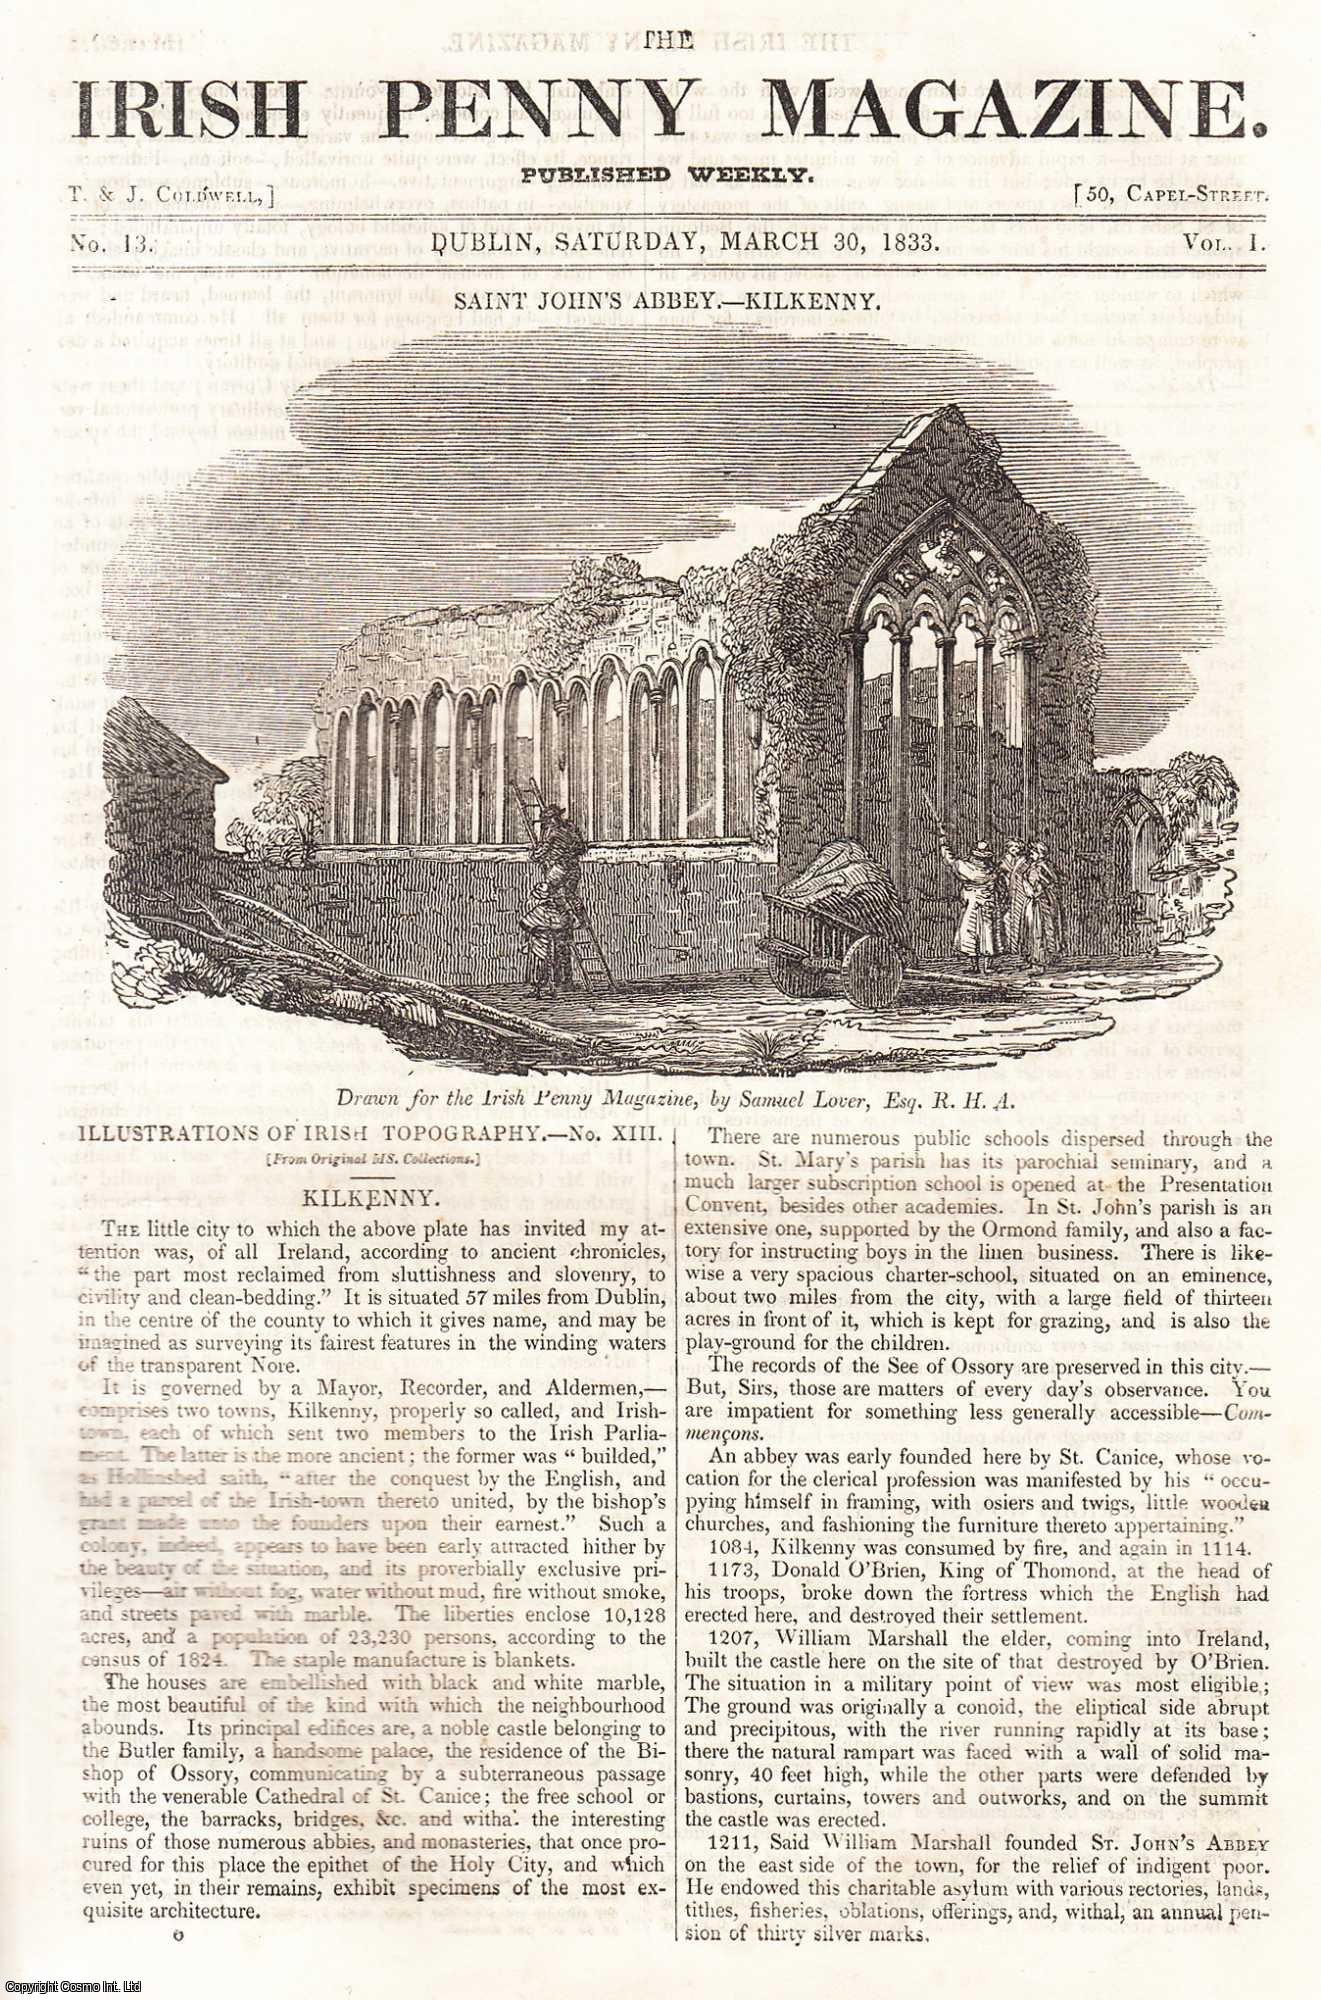 Irish Penny Magazine - 1833, Saint John's Abbey, Kilkenny. Featured in a full weekly issue of the uncommon Irish Penny Magazine, 1833.